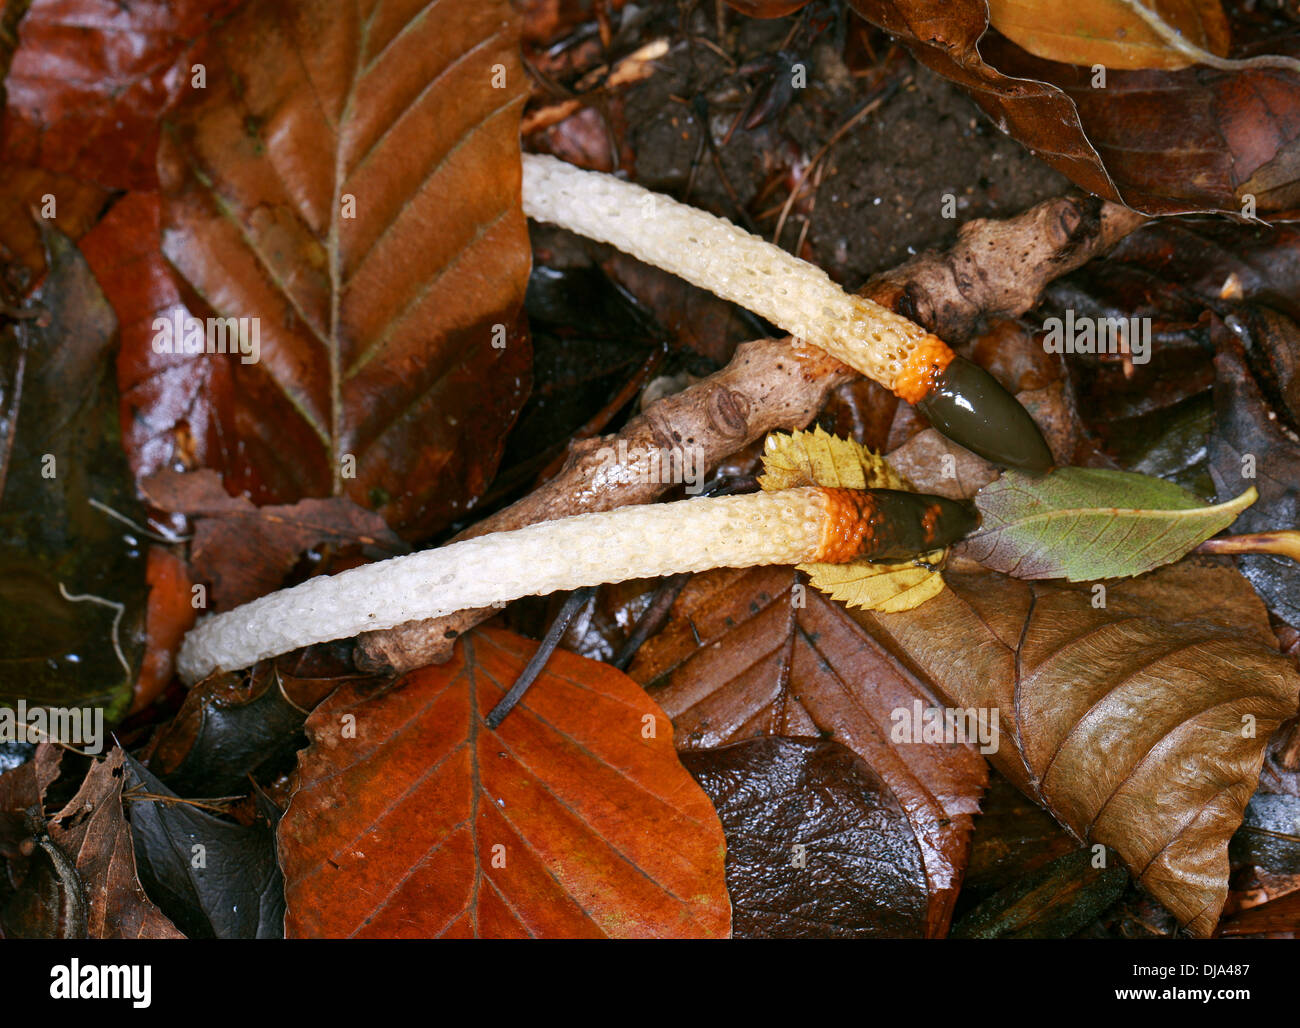 Hund Stinkmorchel, Mutinus Caninus, Phallaceae. Wachsen im Wald Laubstreu. Stockfoto